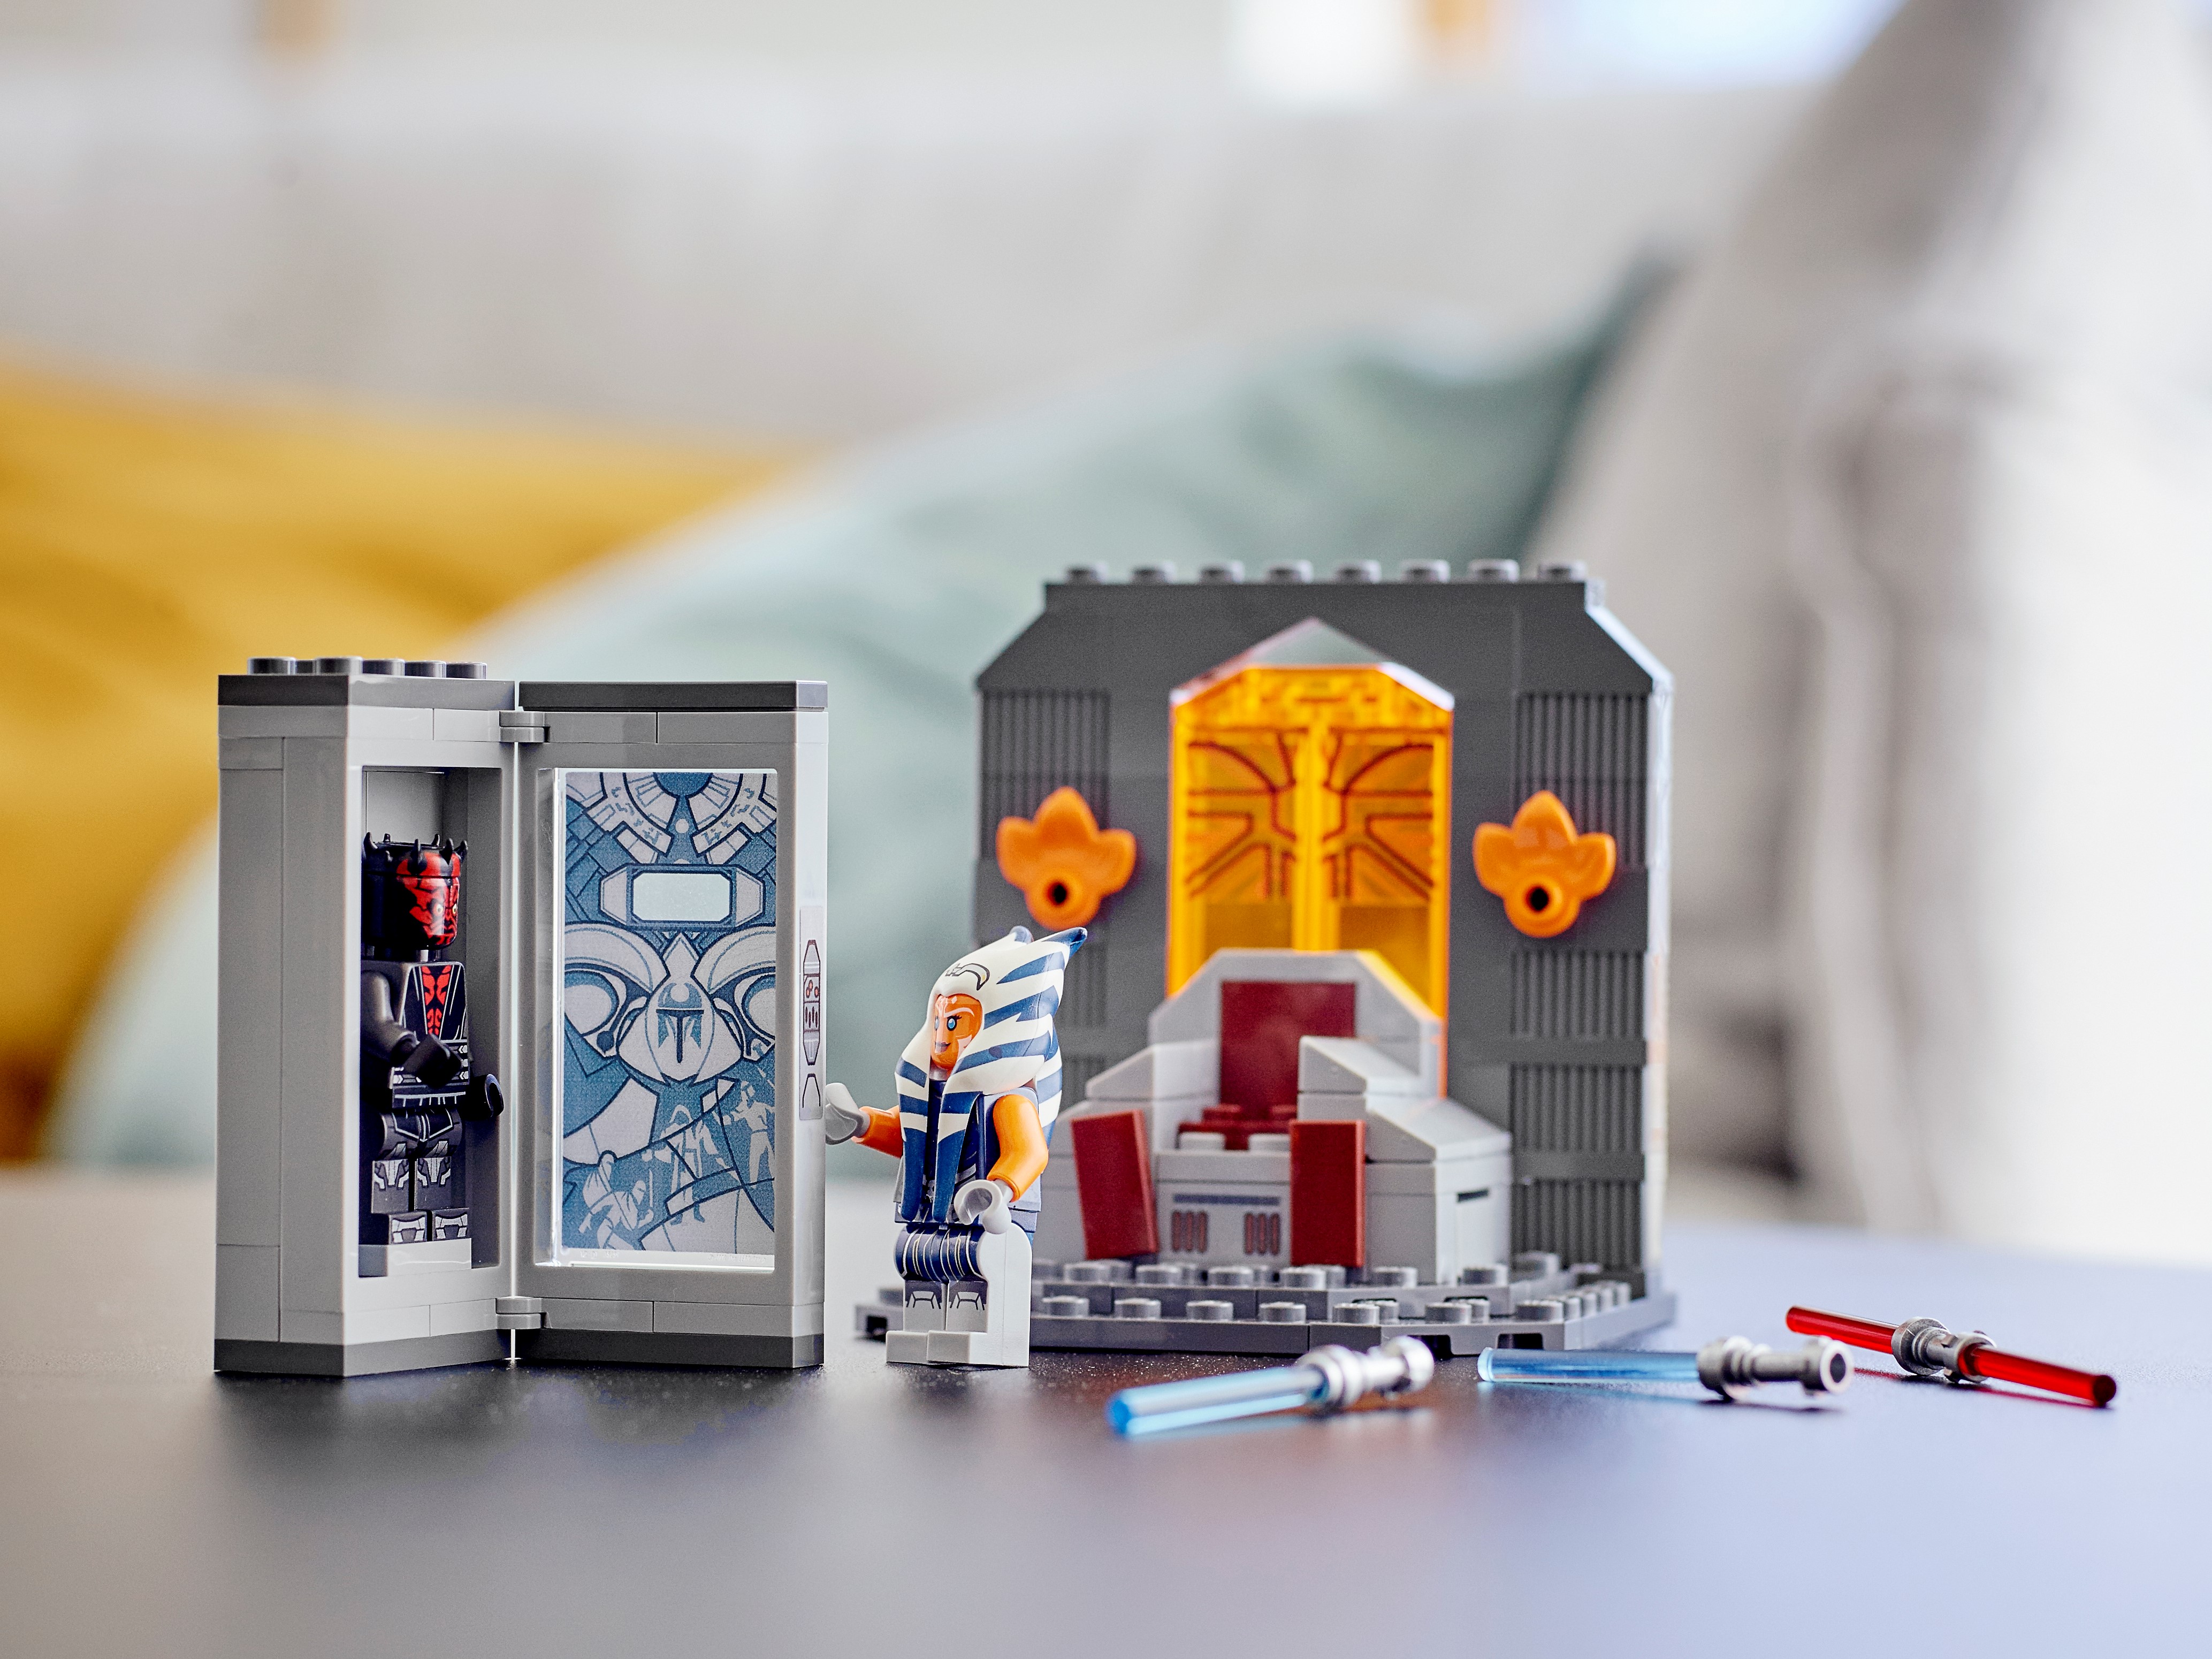 Lego 75310 Star Wars Duel on Mandalore  Darth Maul/Ashoka Tano New Damaged Box